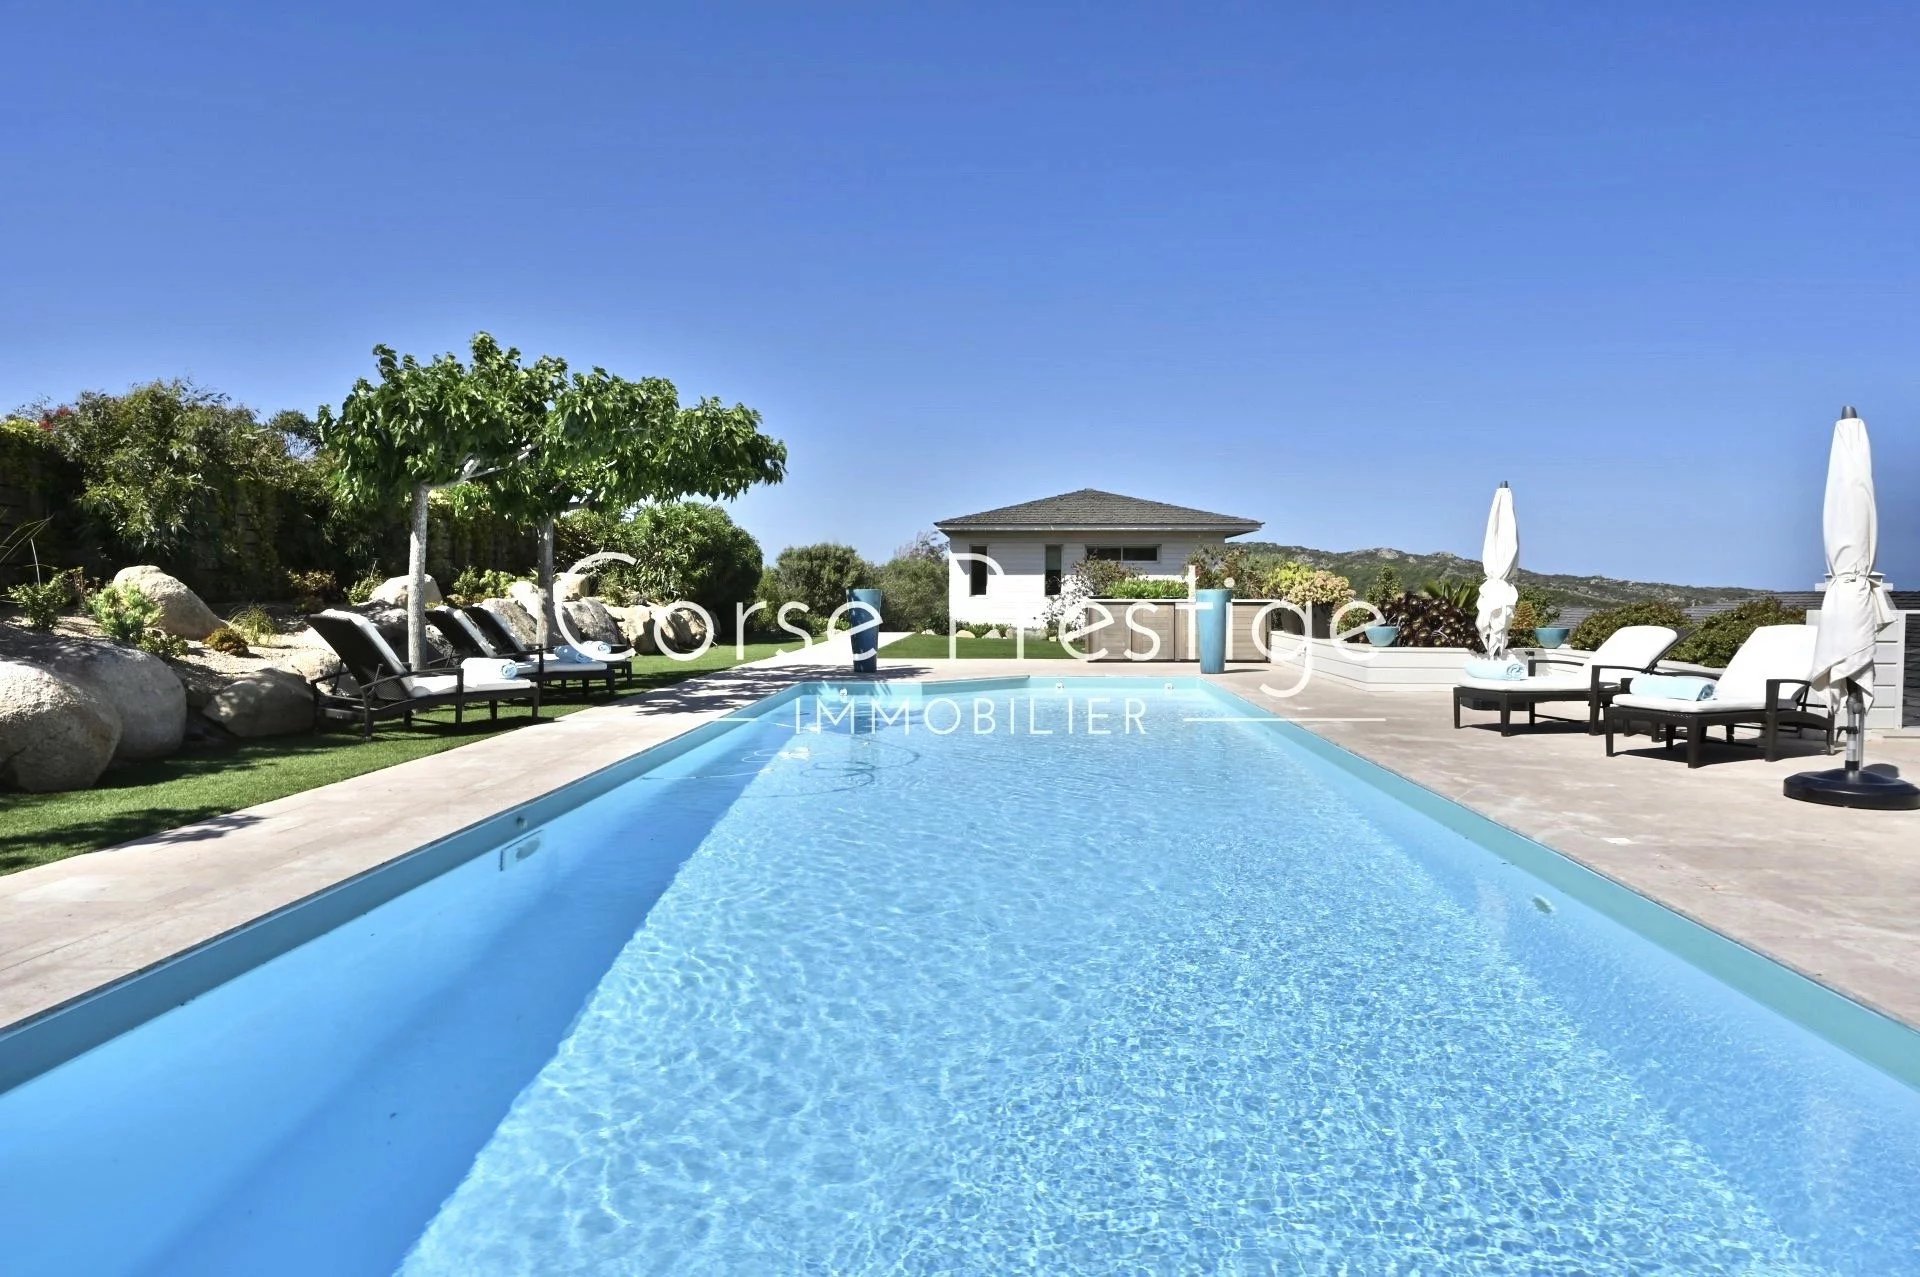 beautiful villa for rent -domaine de sperone- - bonifacio image3